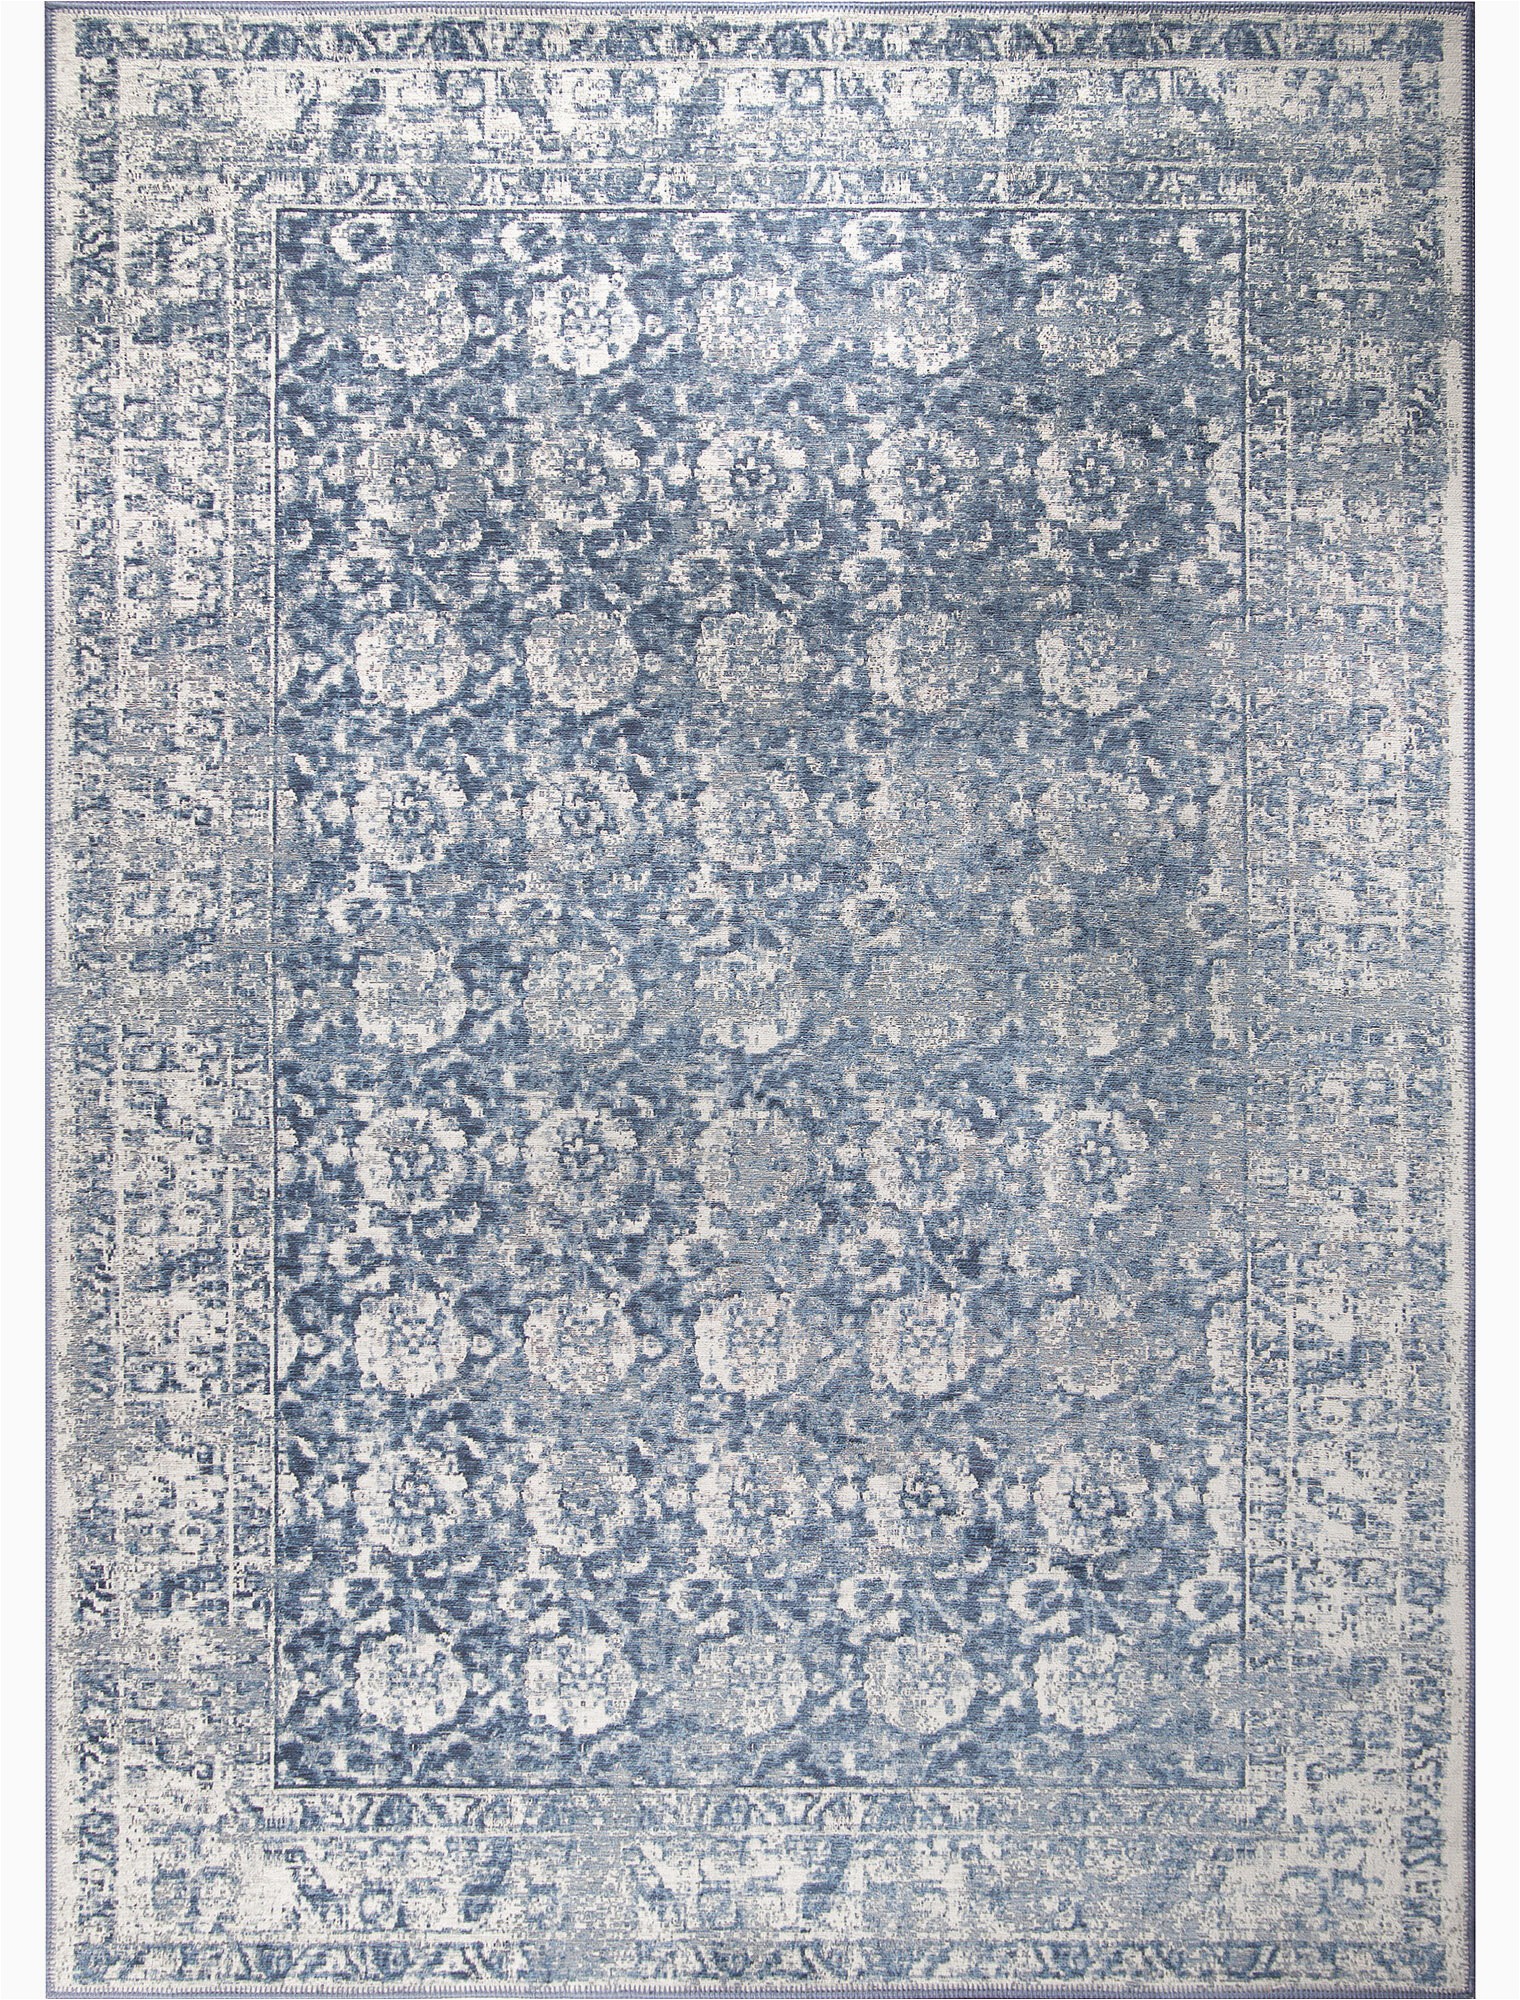 gareth woolcotton slate blue area rug